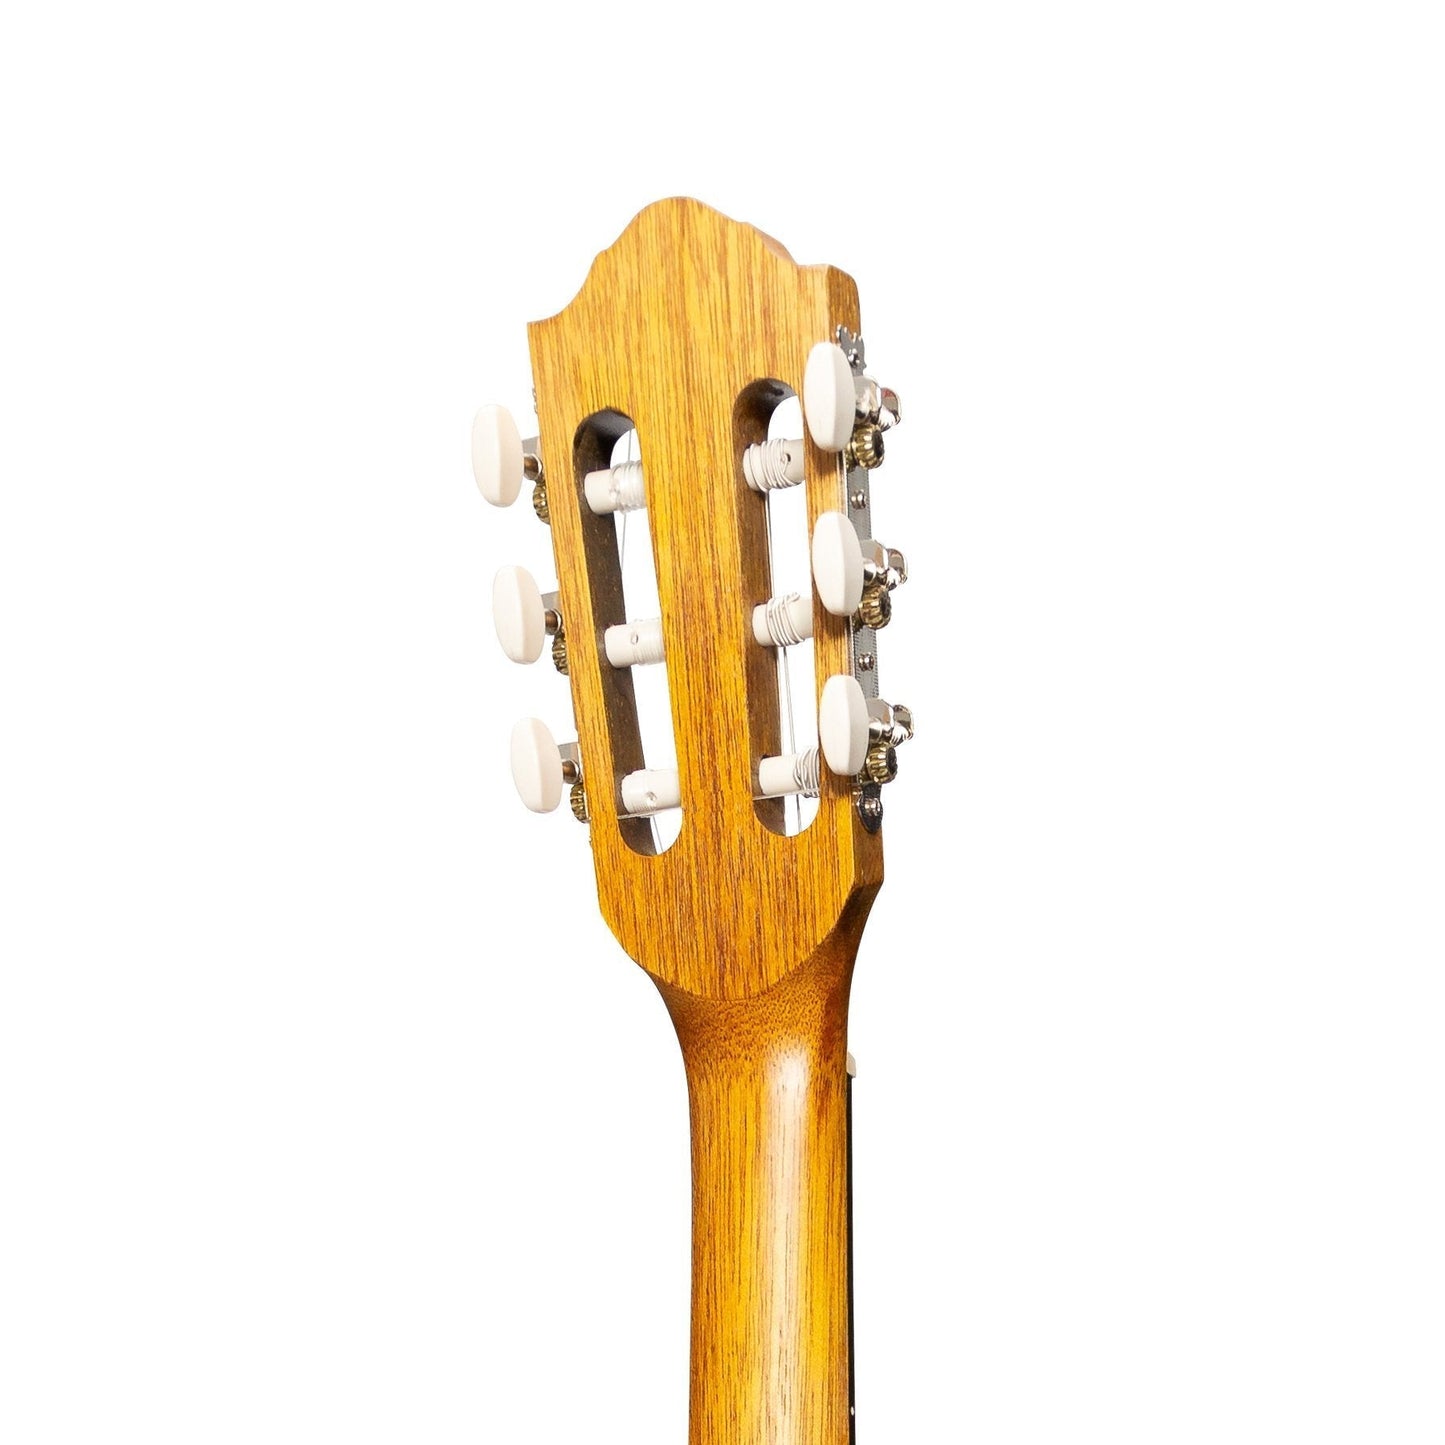 Martinez 'Slim Jim' Full Size Student Classical Guitar with Built In Tuner (Spruce/Koa)